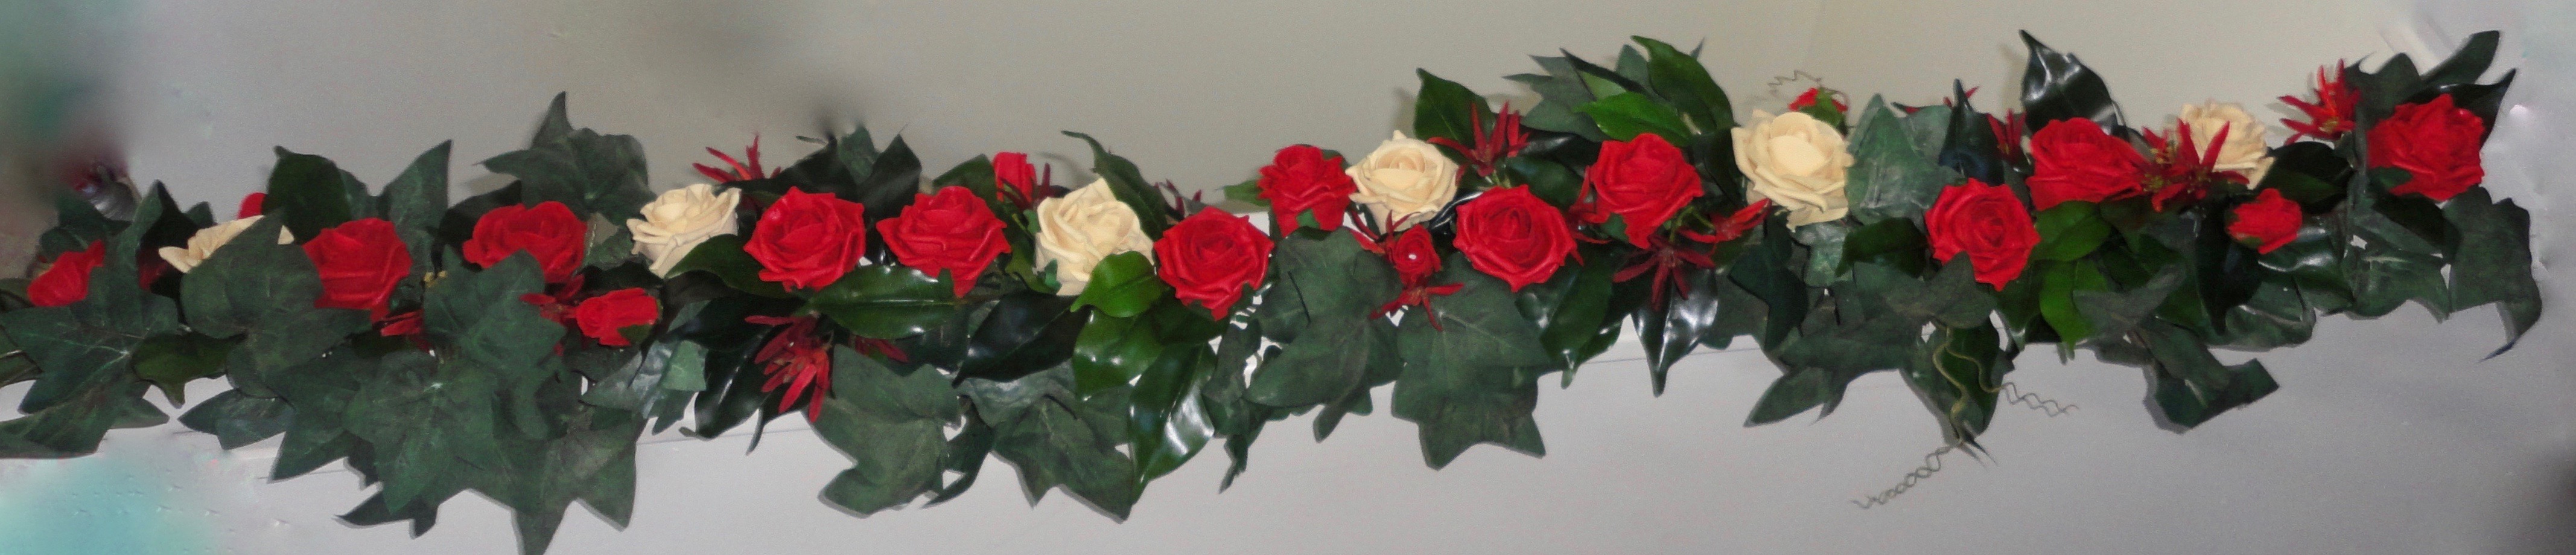 Wedding Garlands - red rose wedding garland